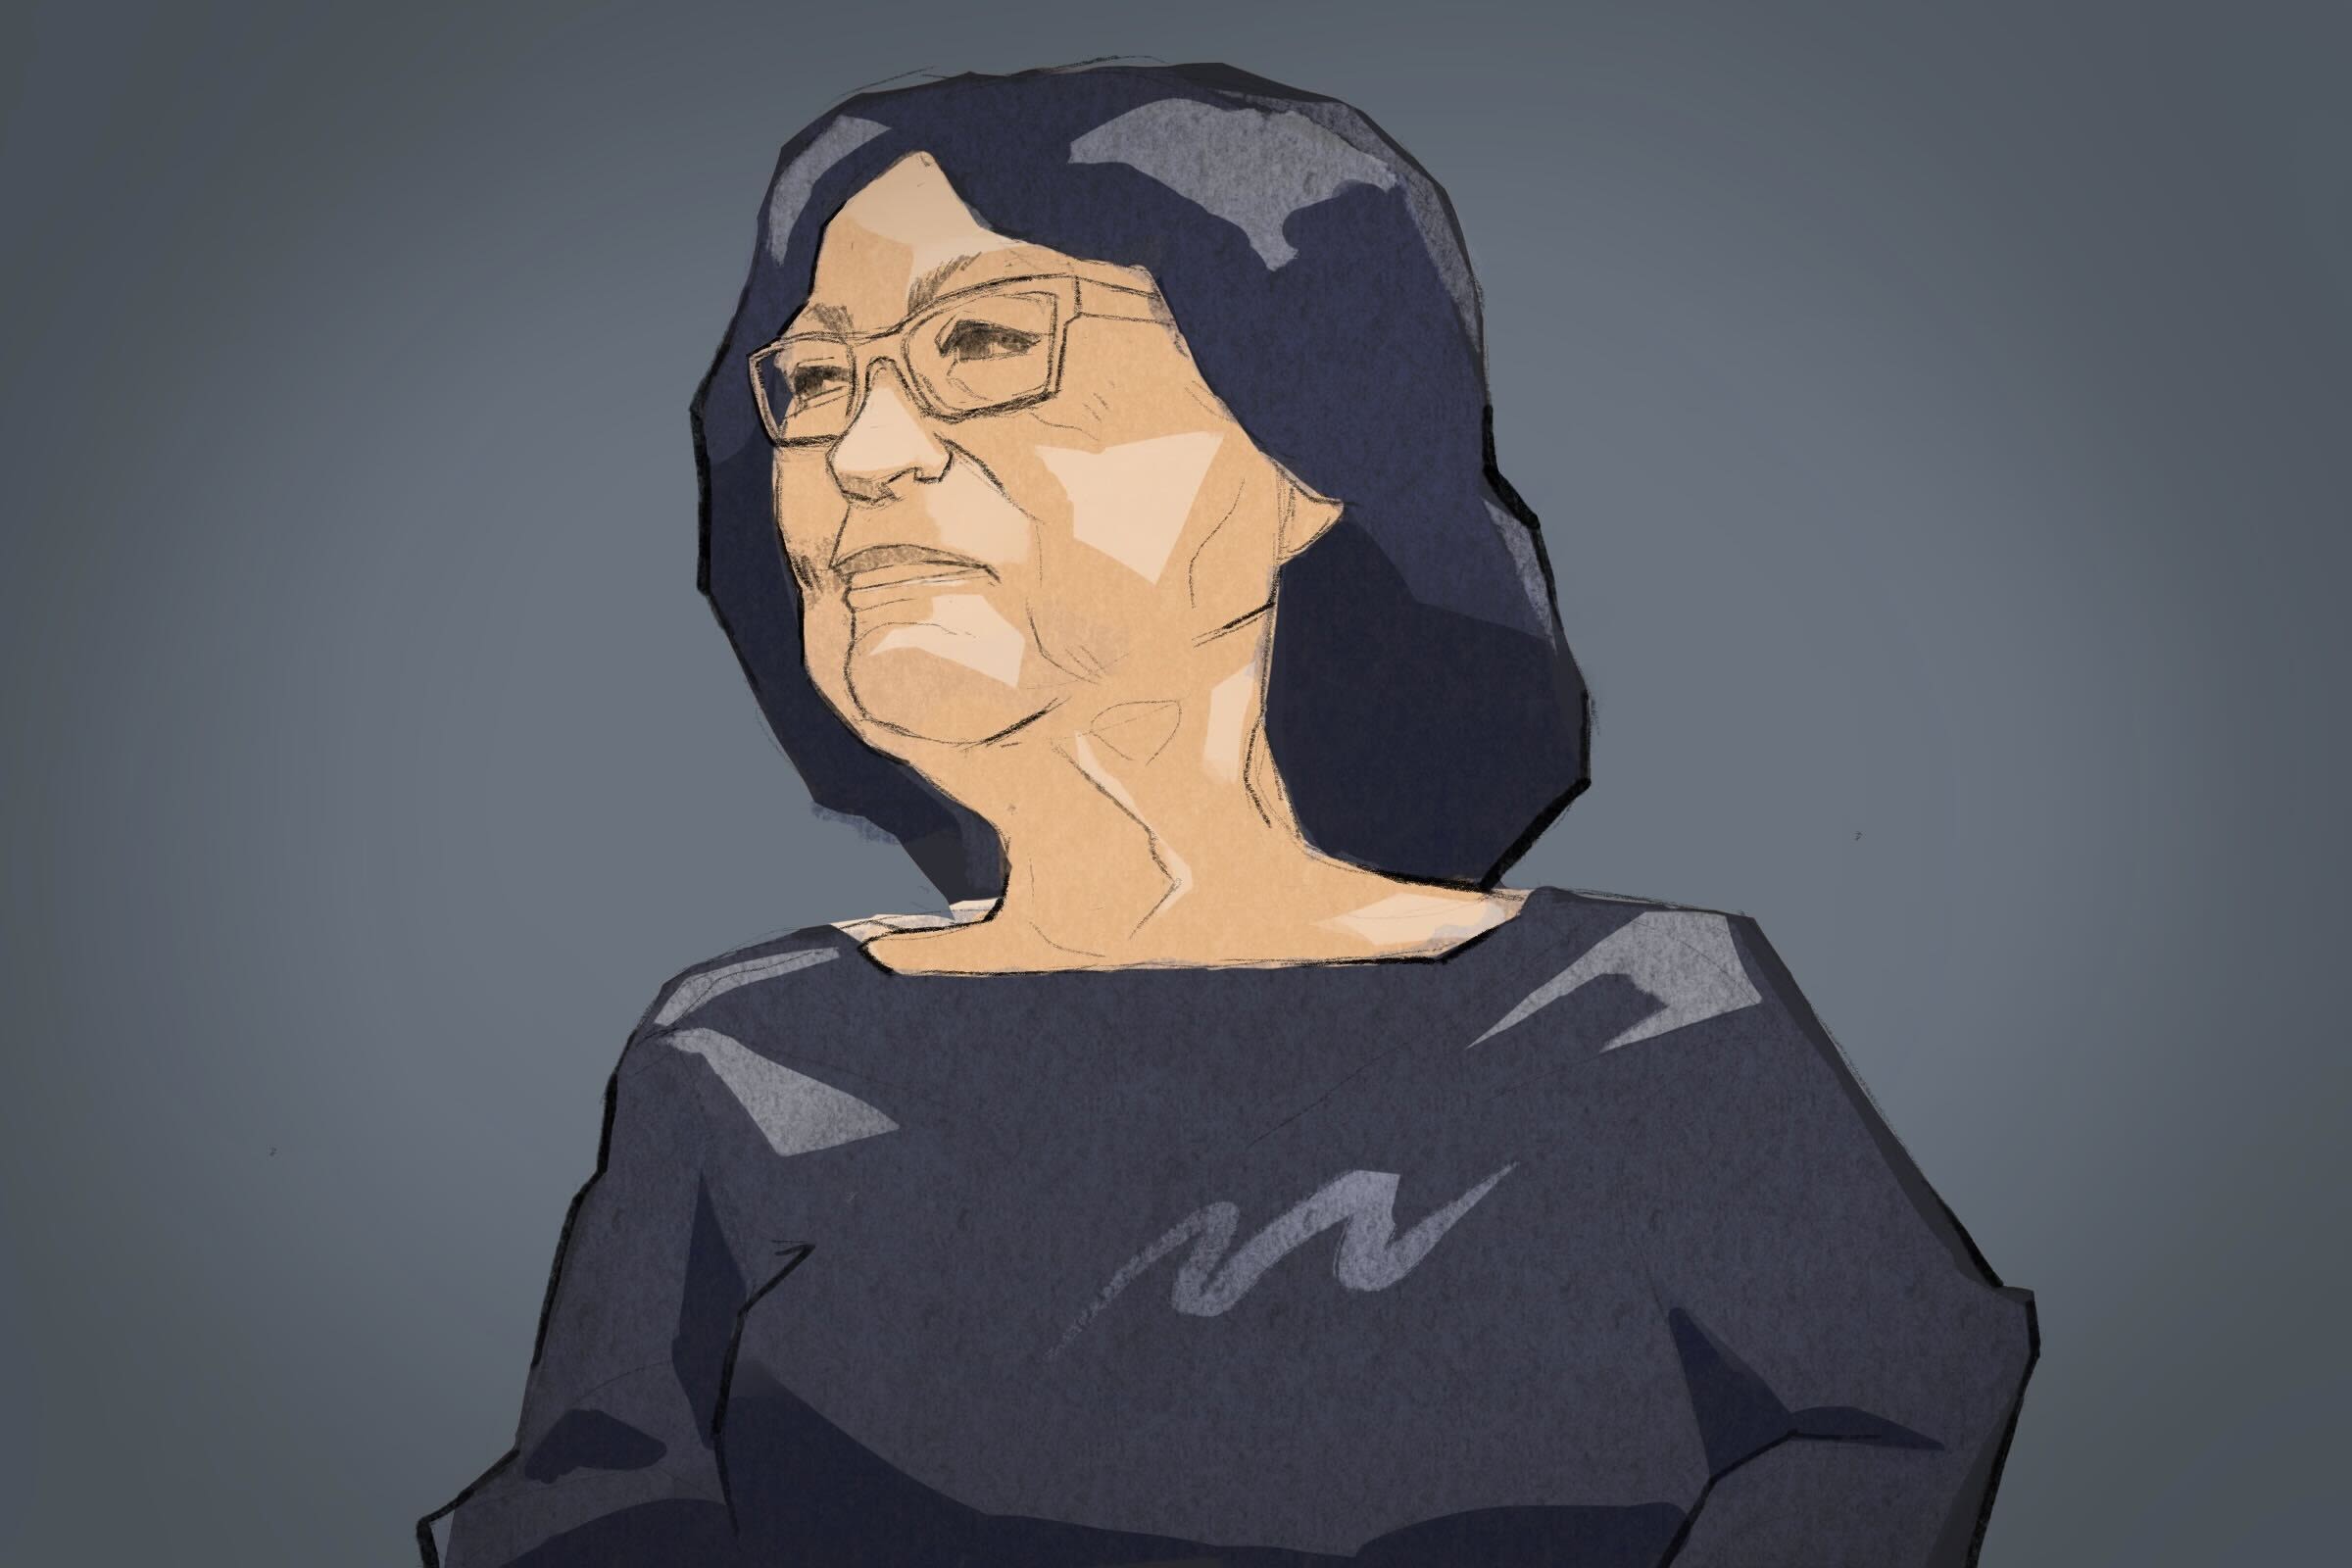 Sonia Sotomayor, it's time to retire